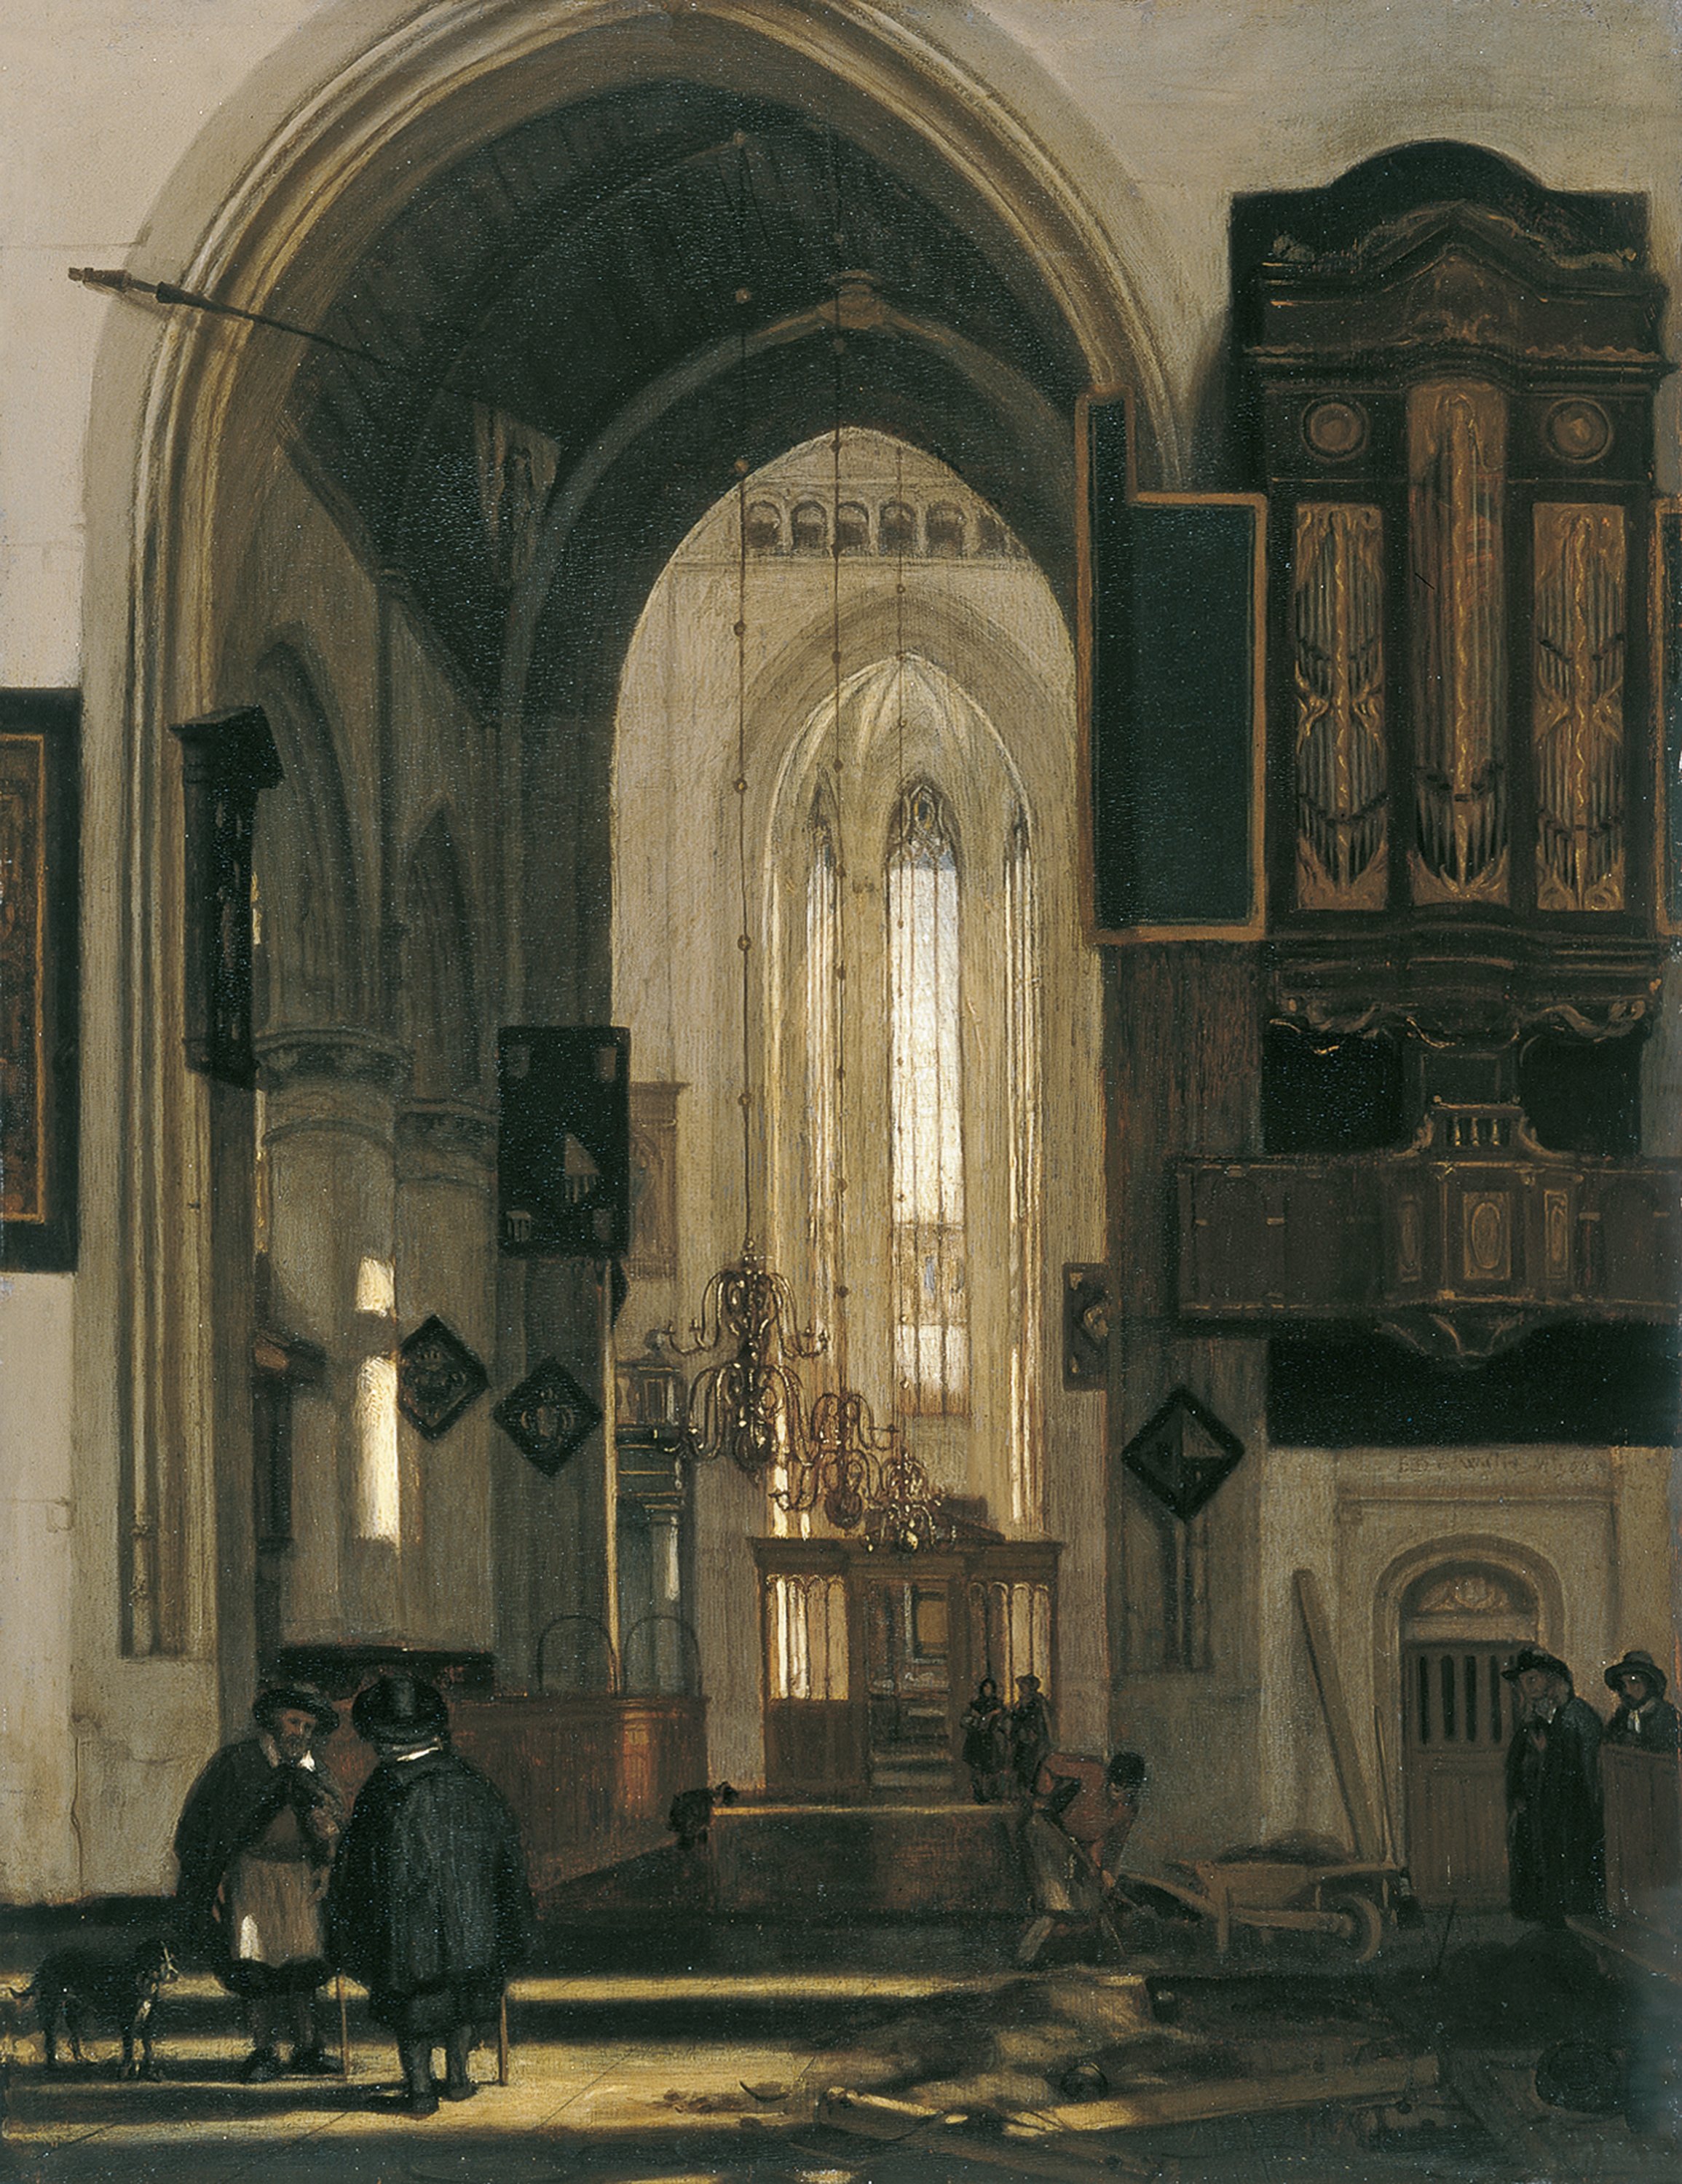 Interior of a Gotic Church. Interior de una Iglesia gótica, ¿166[9]?